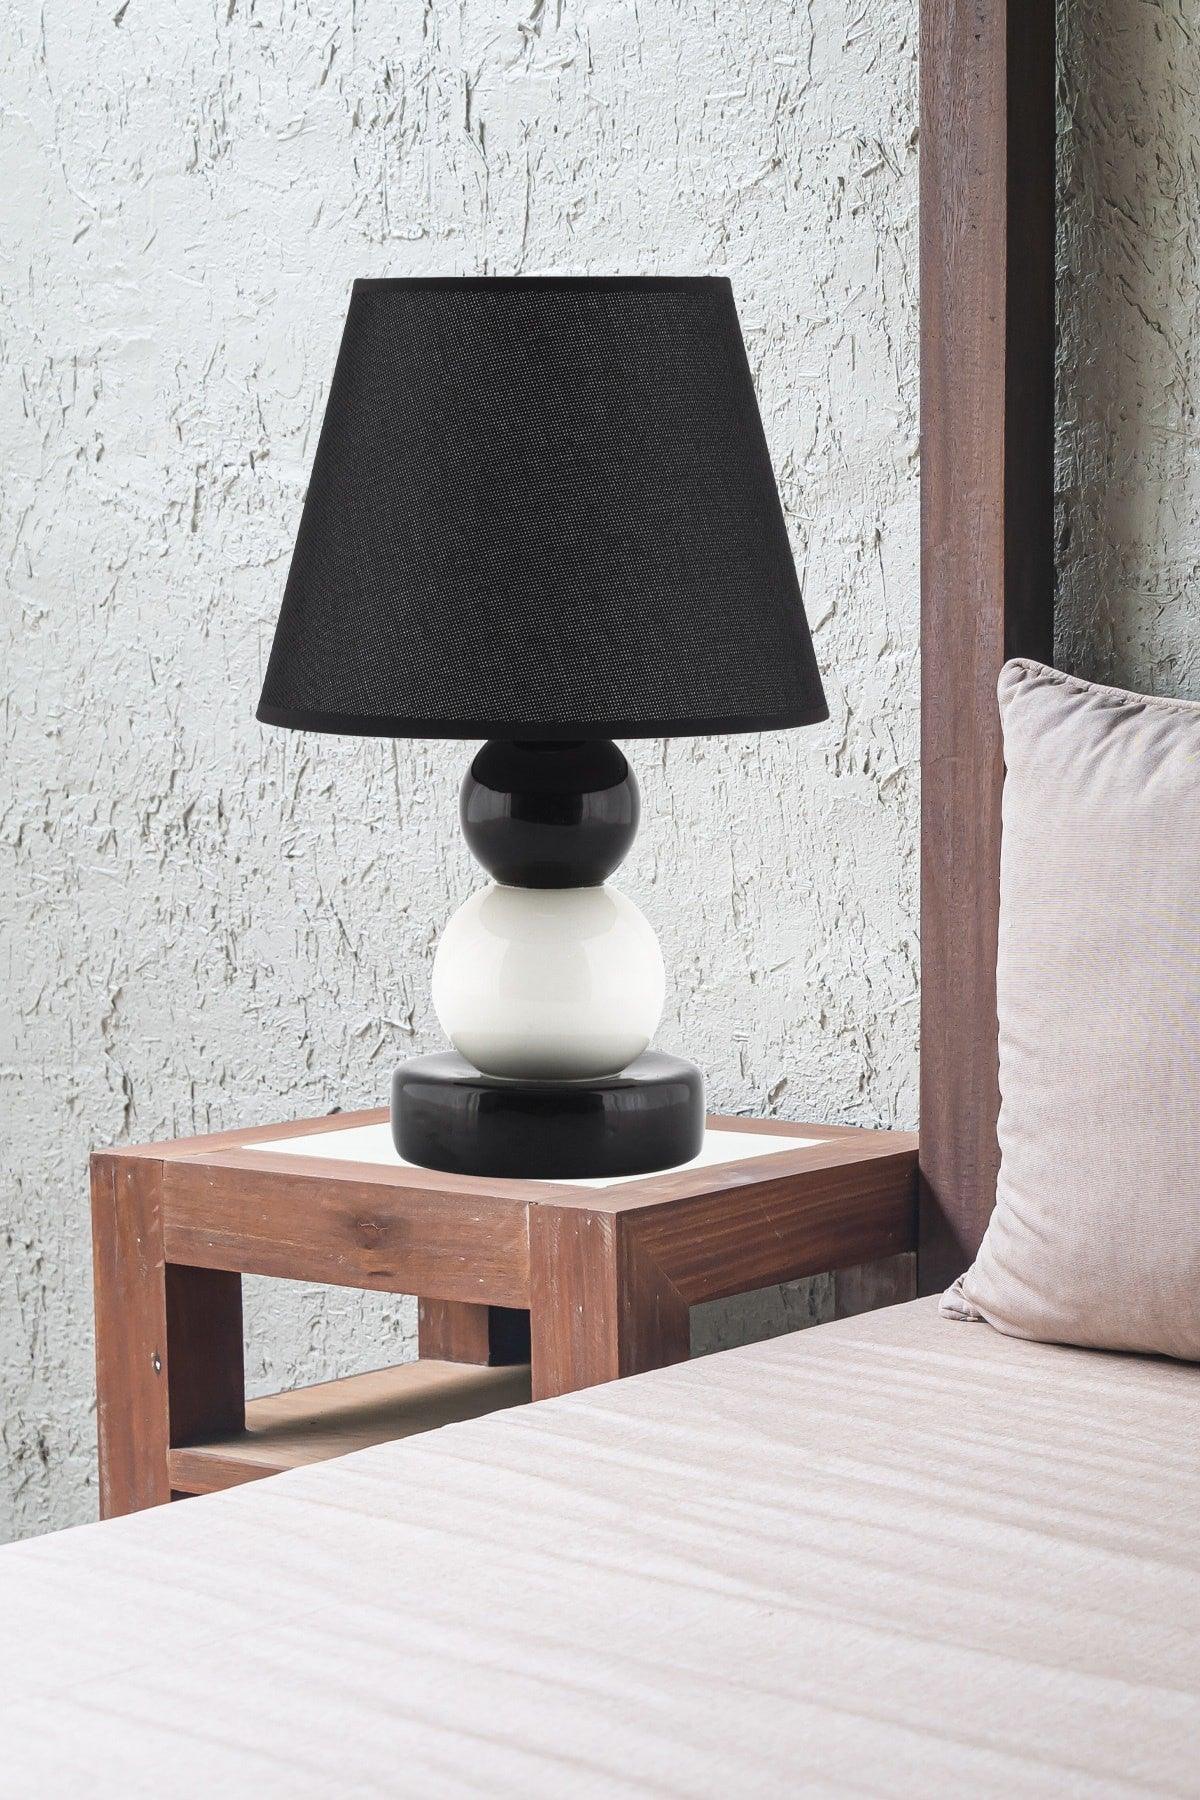 Yarkın Black and White Ceramic Living Room-Living Room-Bedroom Modern Design Retro Lampshade - Swordslife